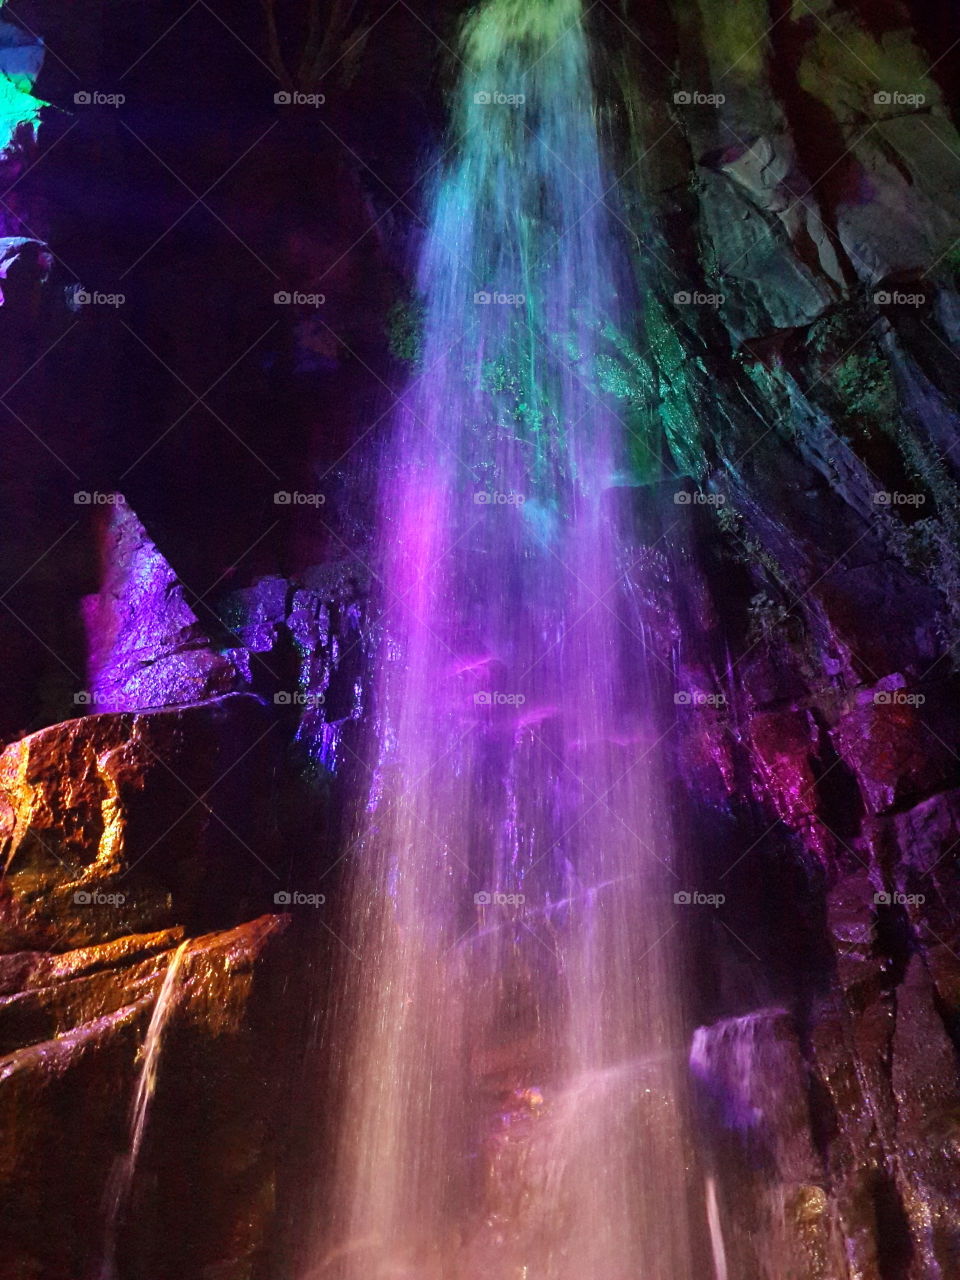 waterfall. nice water fall with lights